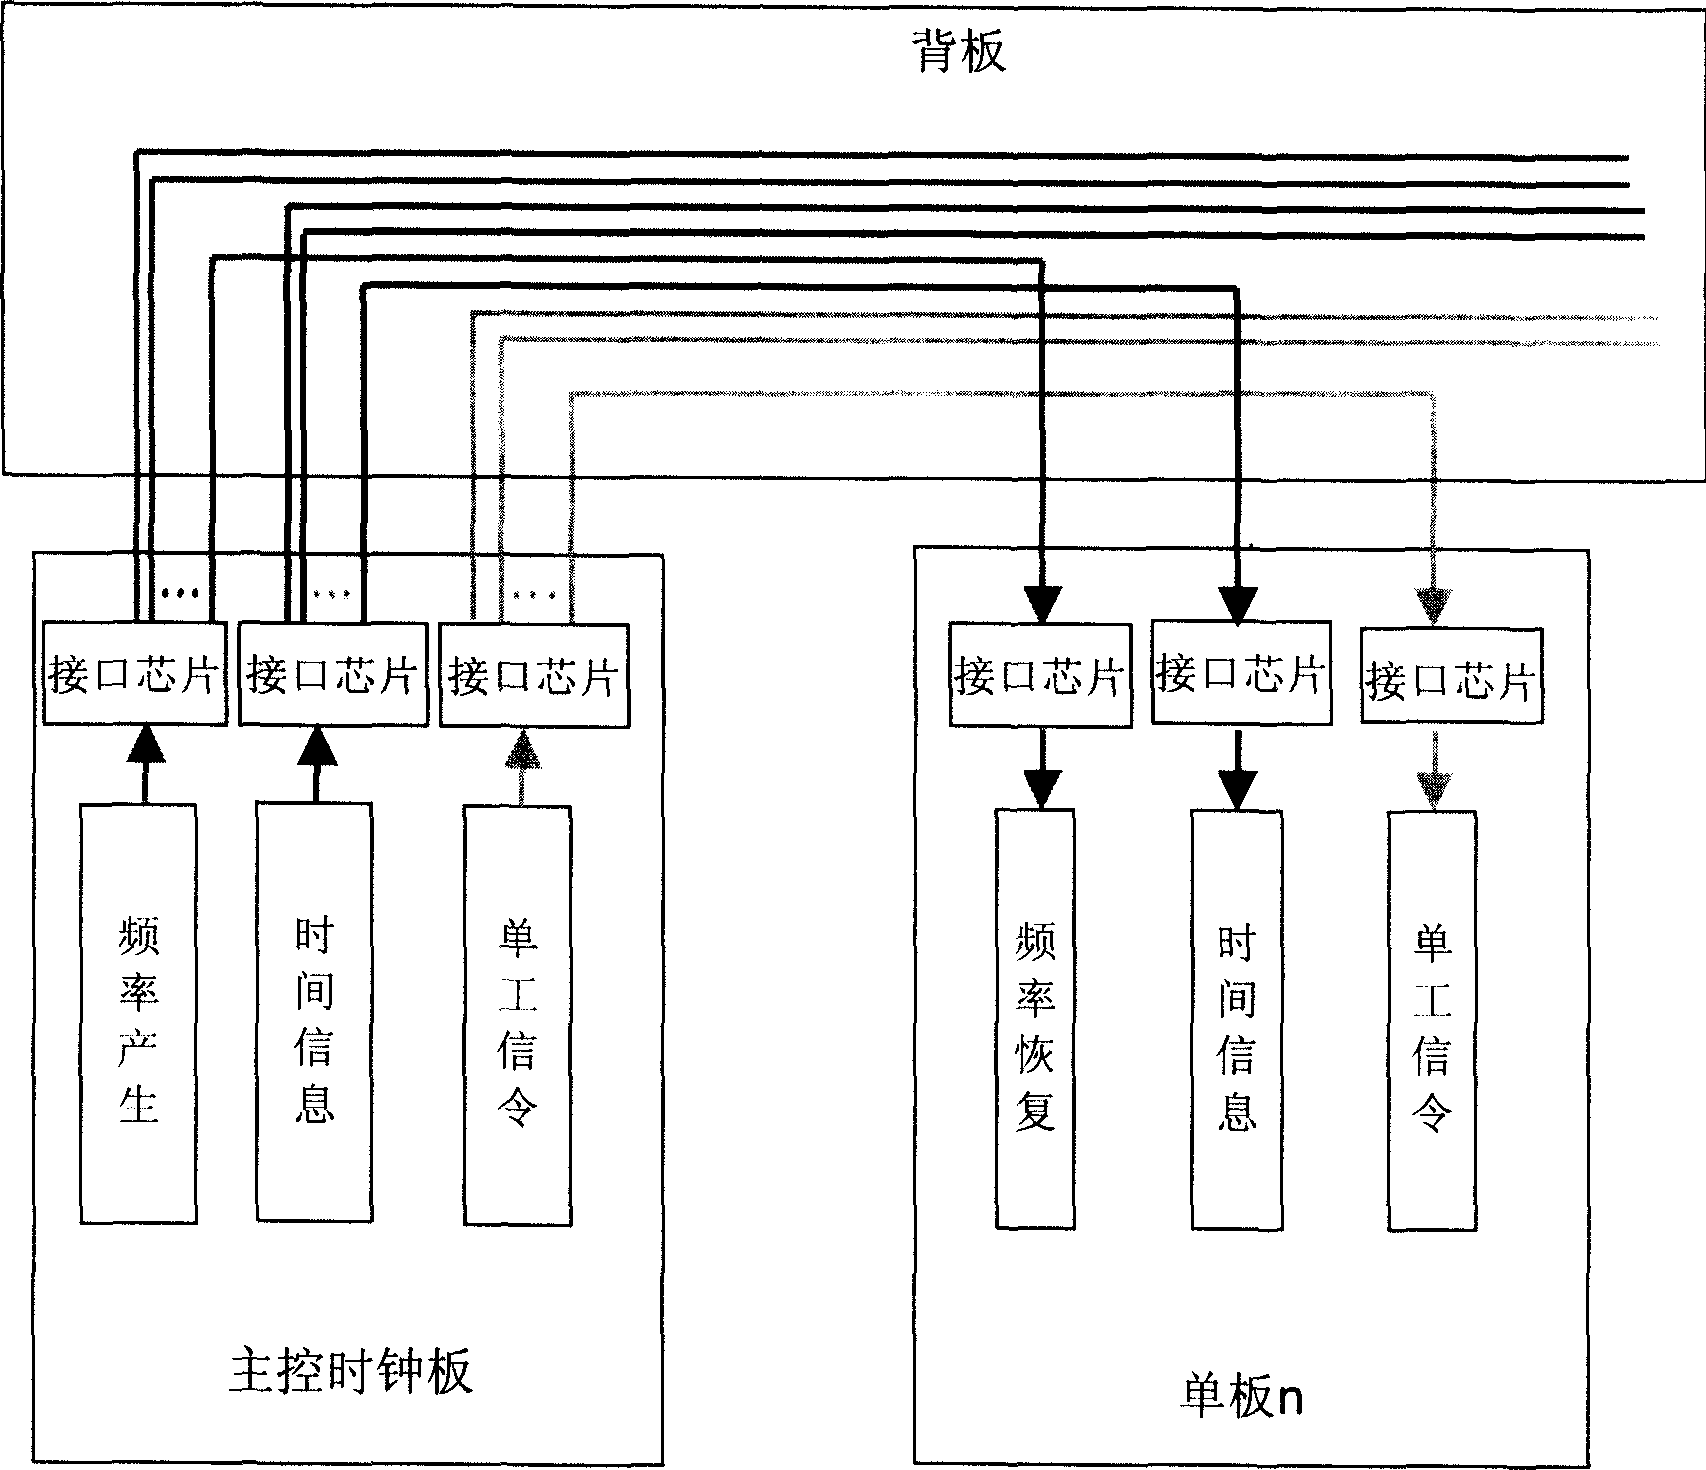 Clock, signal multiplex method and system